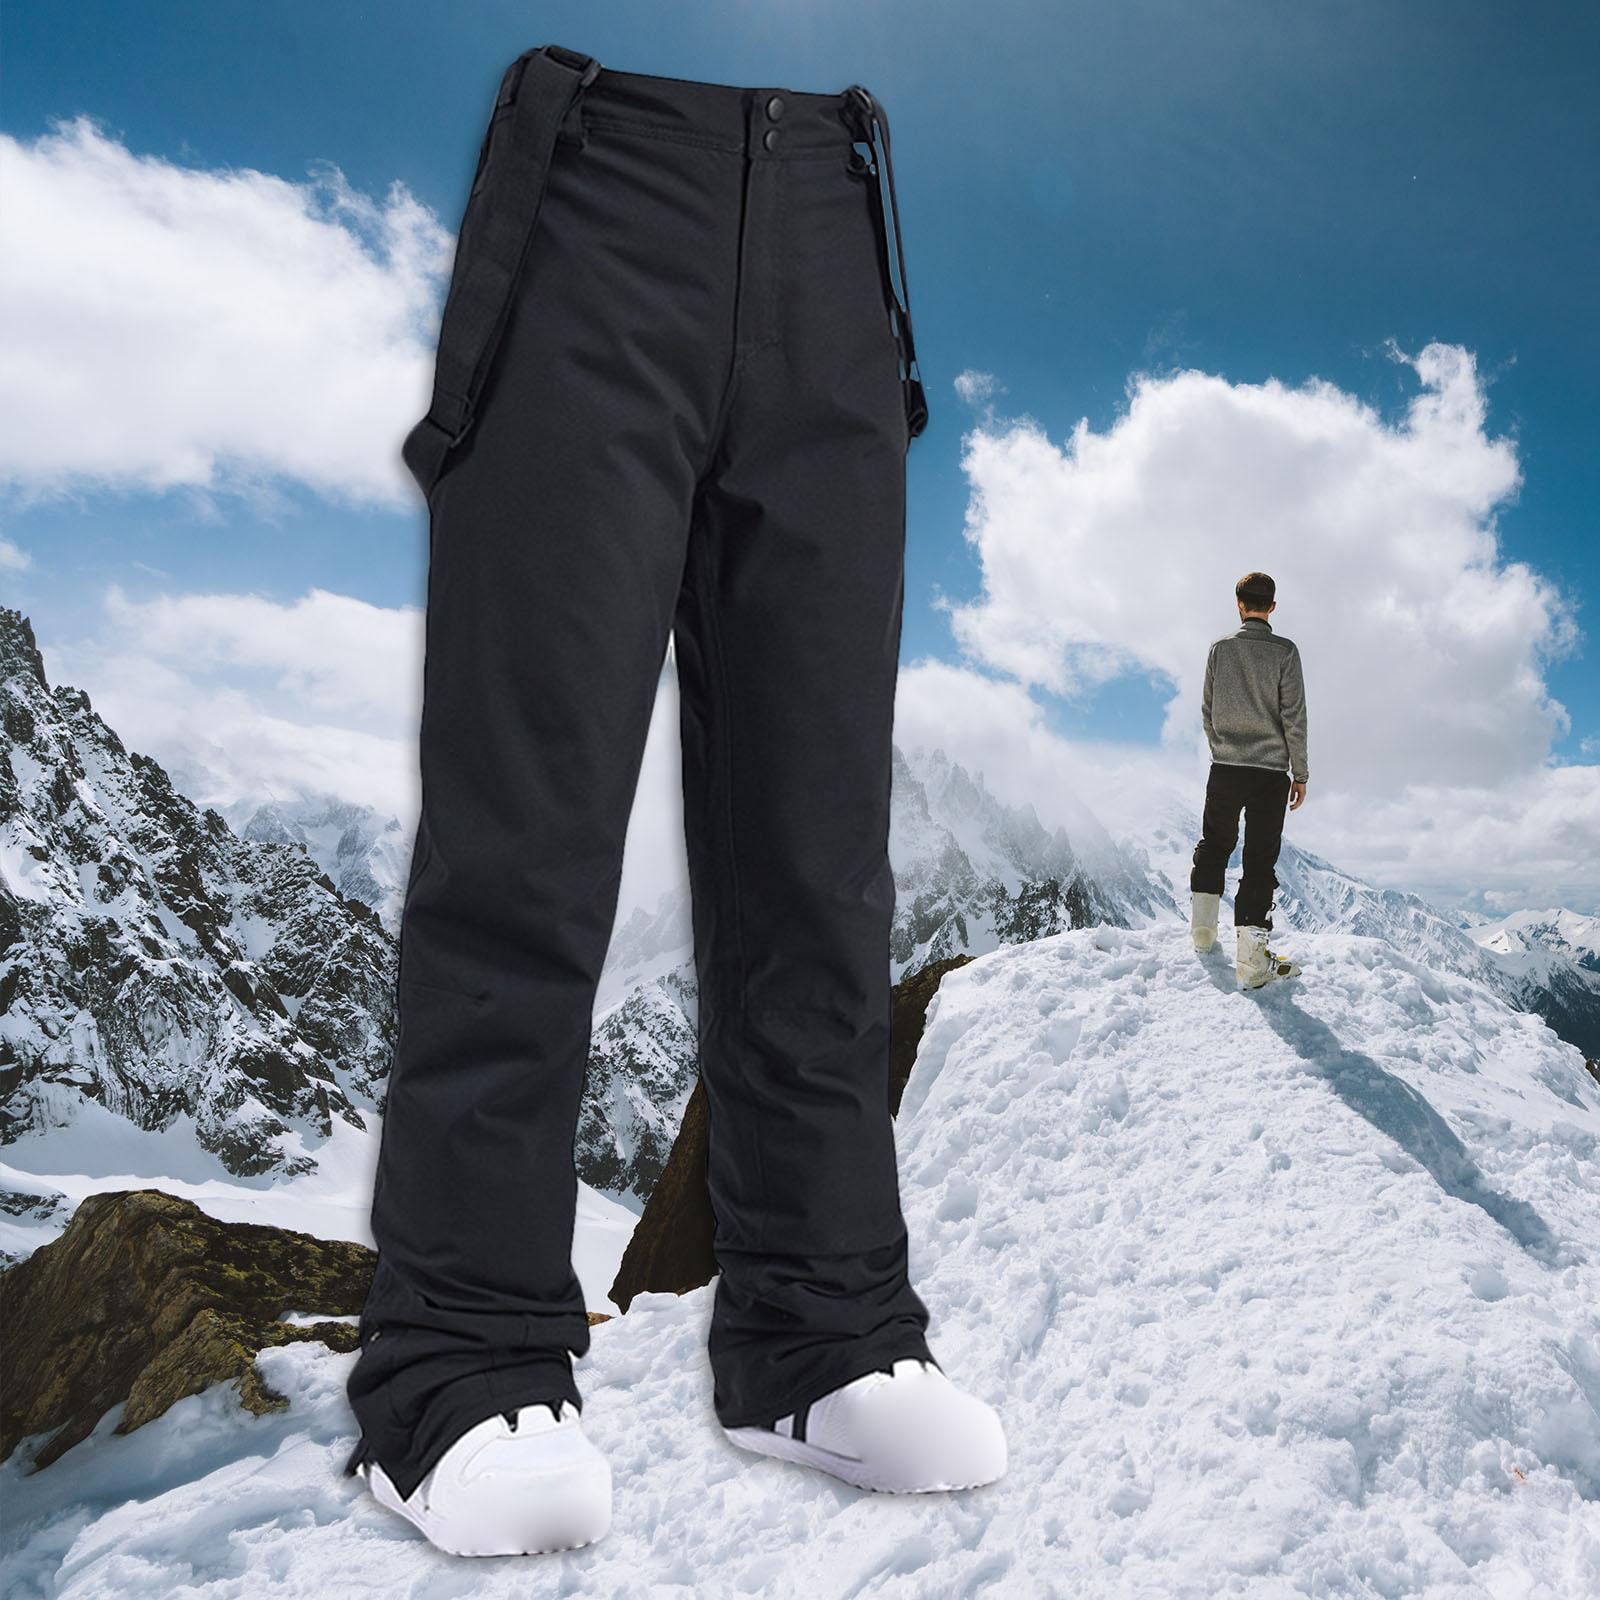 Black snow bibs, pants, lightweight, water, wind full length pants for